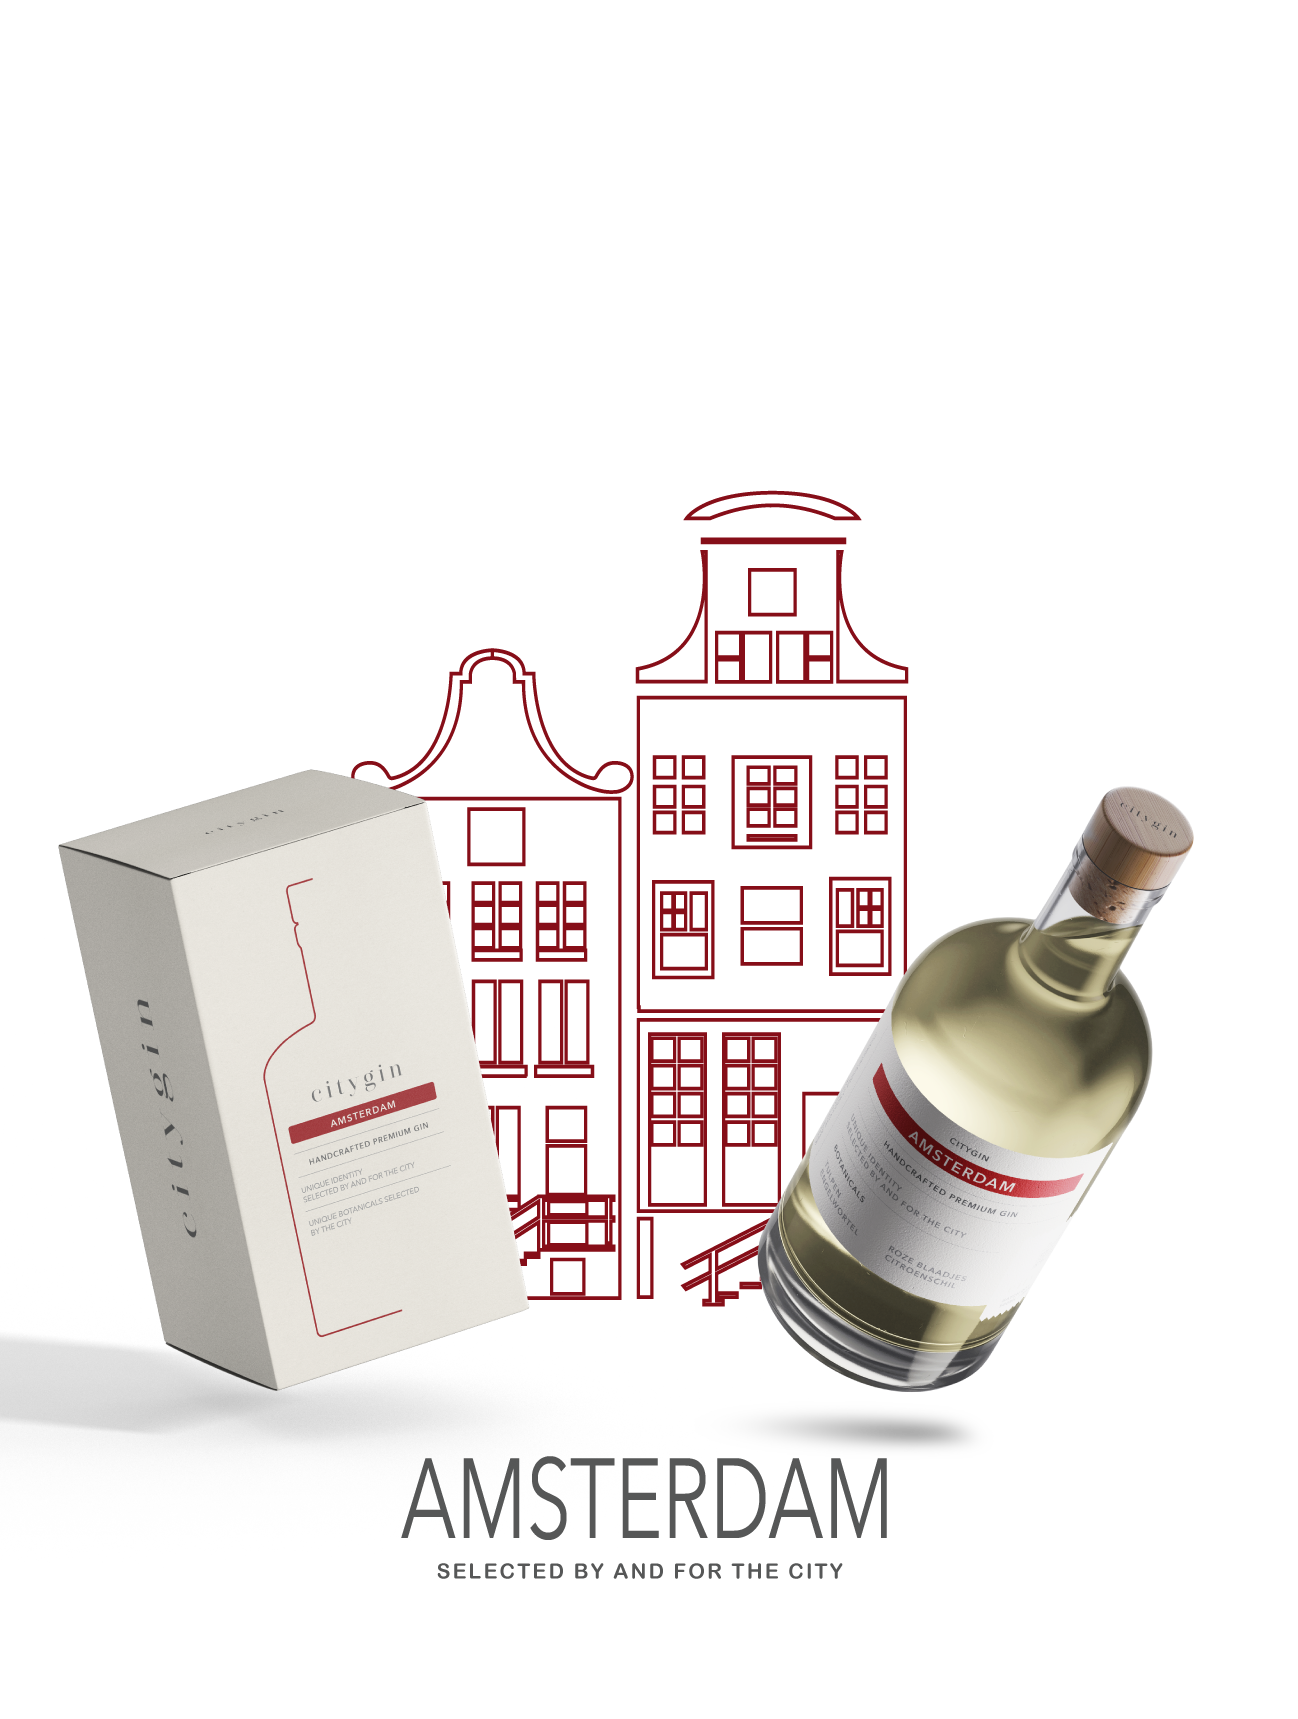 Amsterdam gin